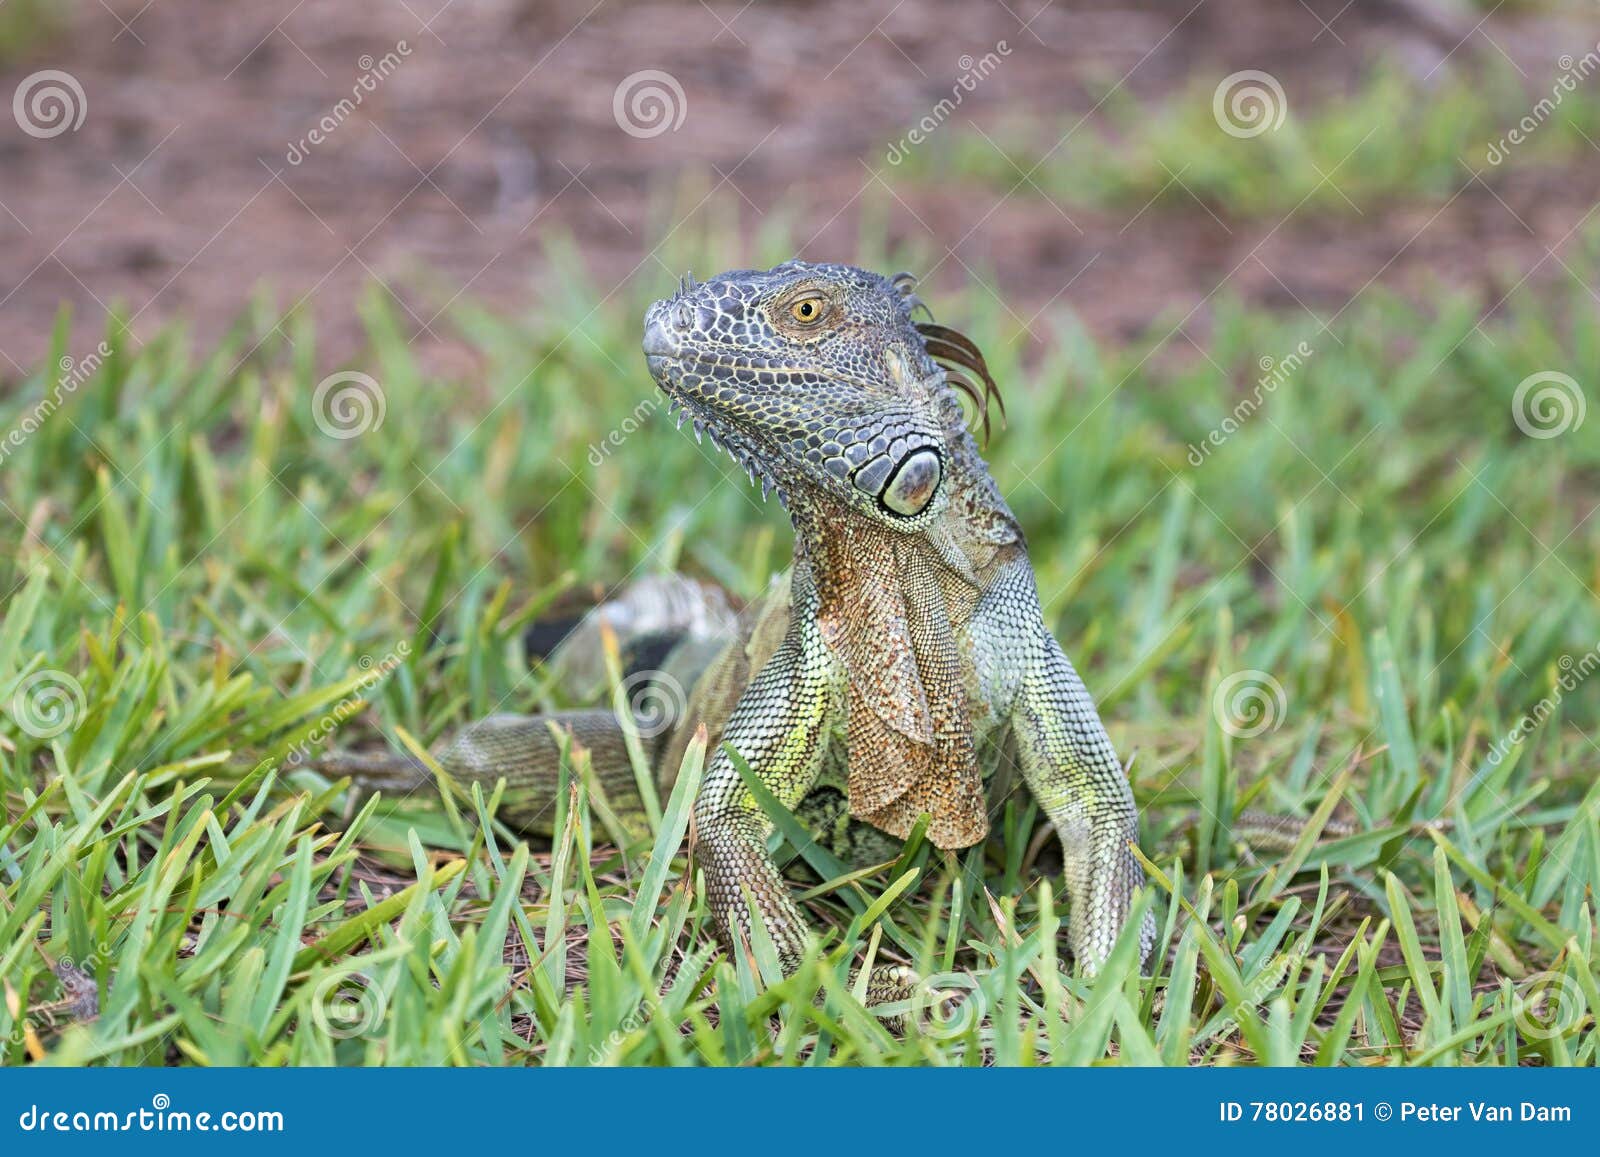 juvenile green iguana sitting in the grass